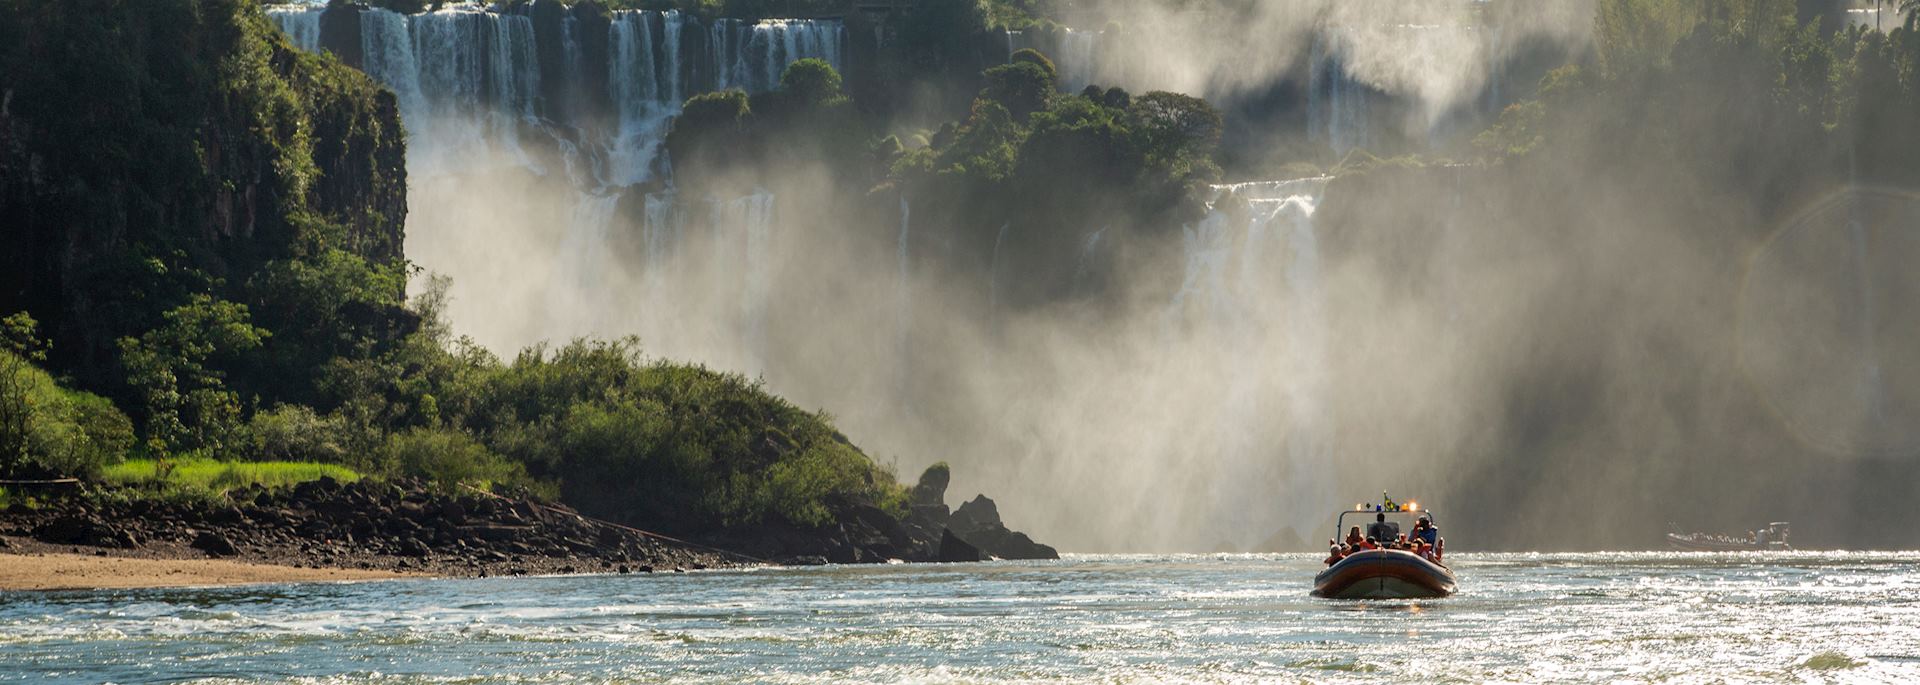 Macuco Safari at Iguaçu Falls